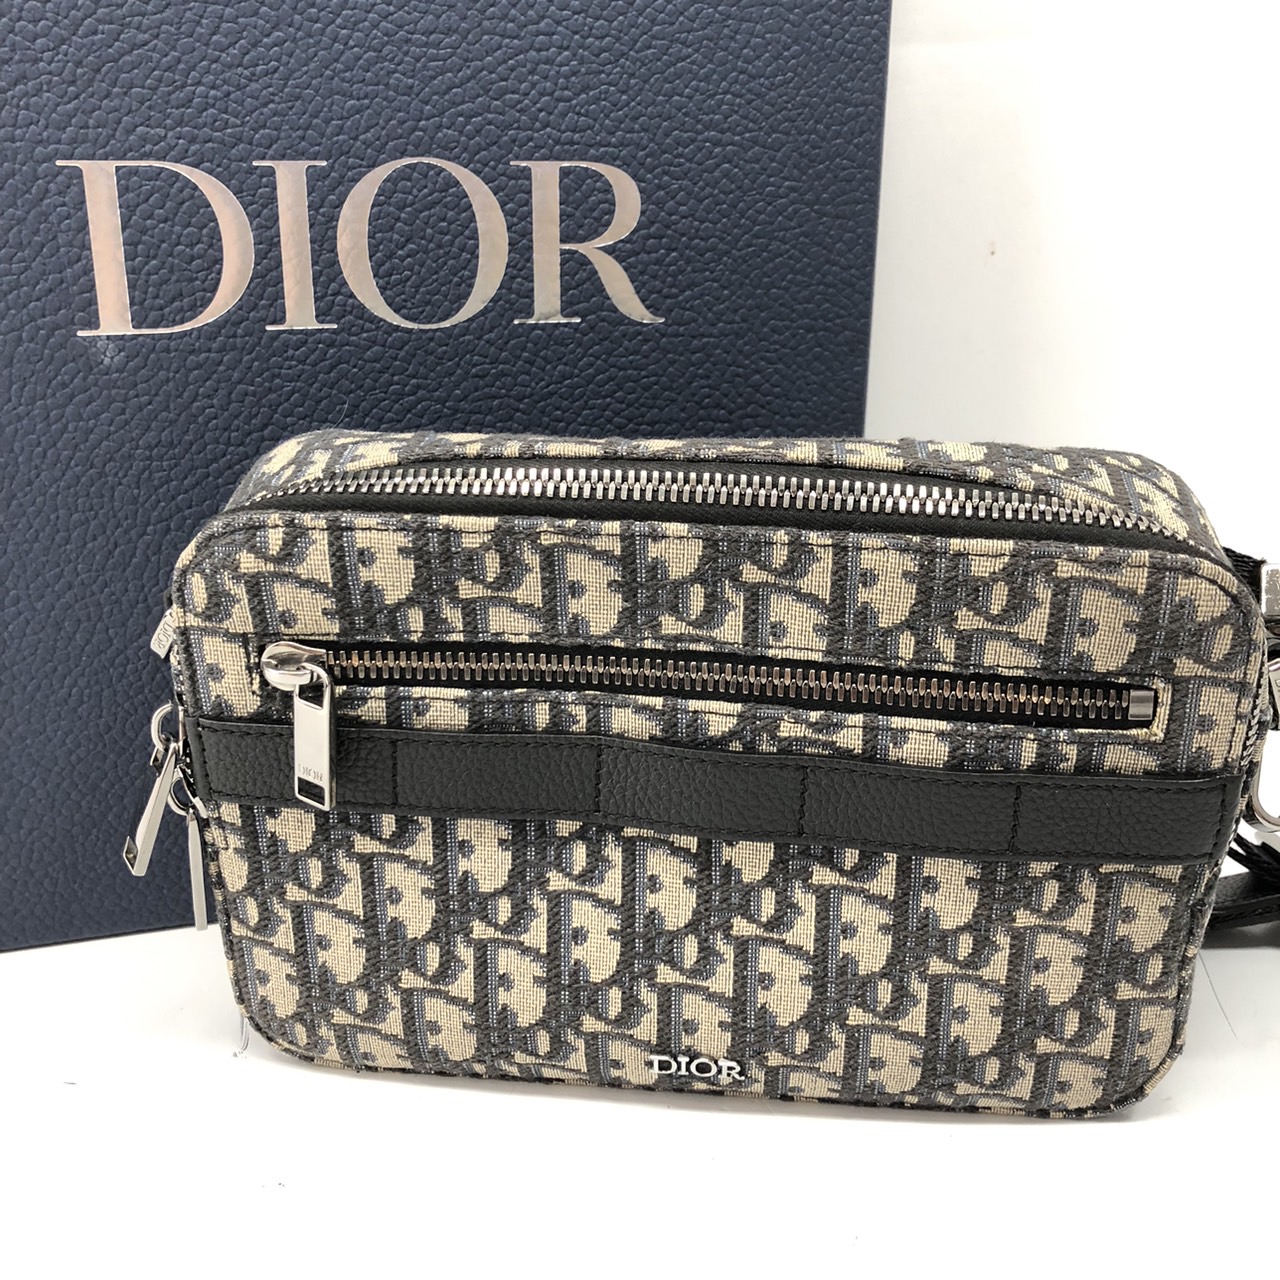 Christian Dior Bag